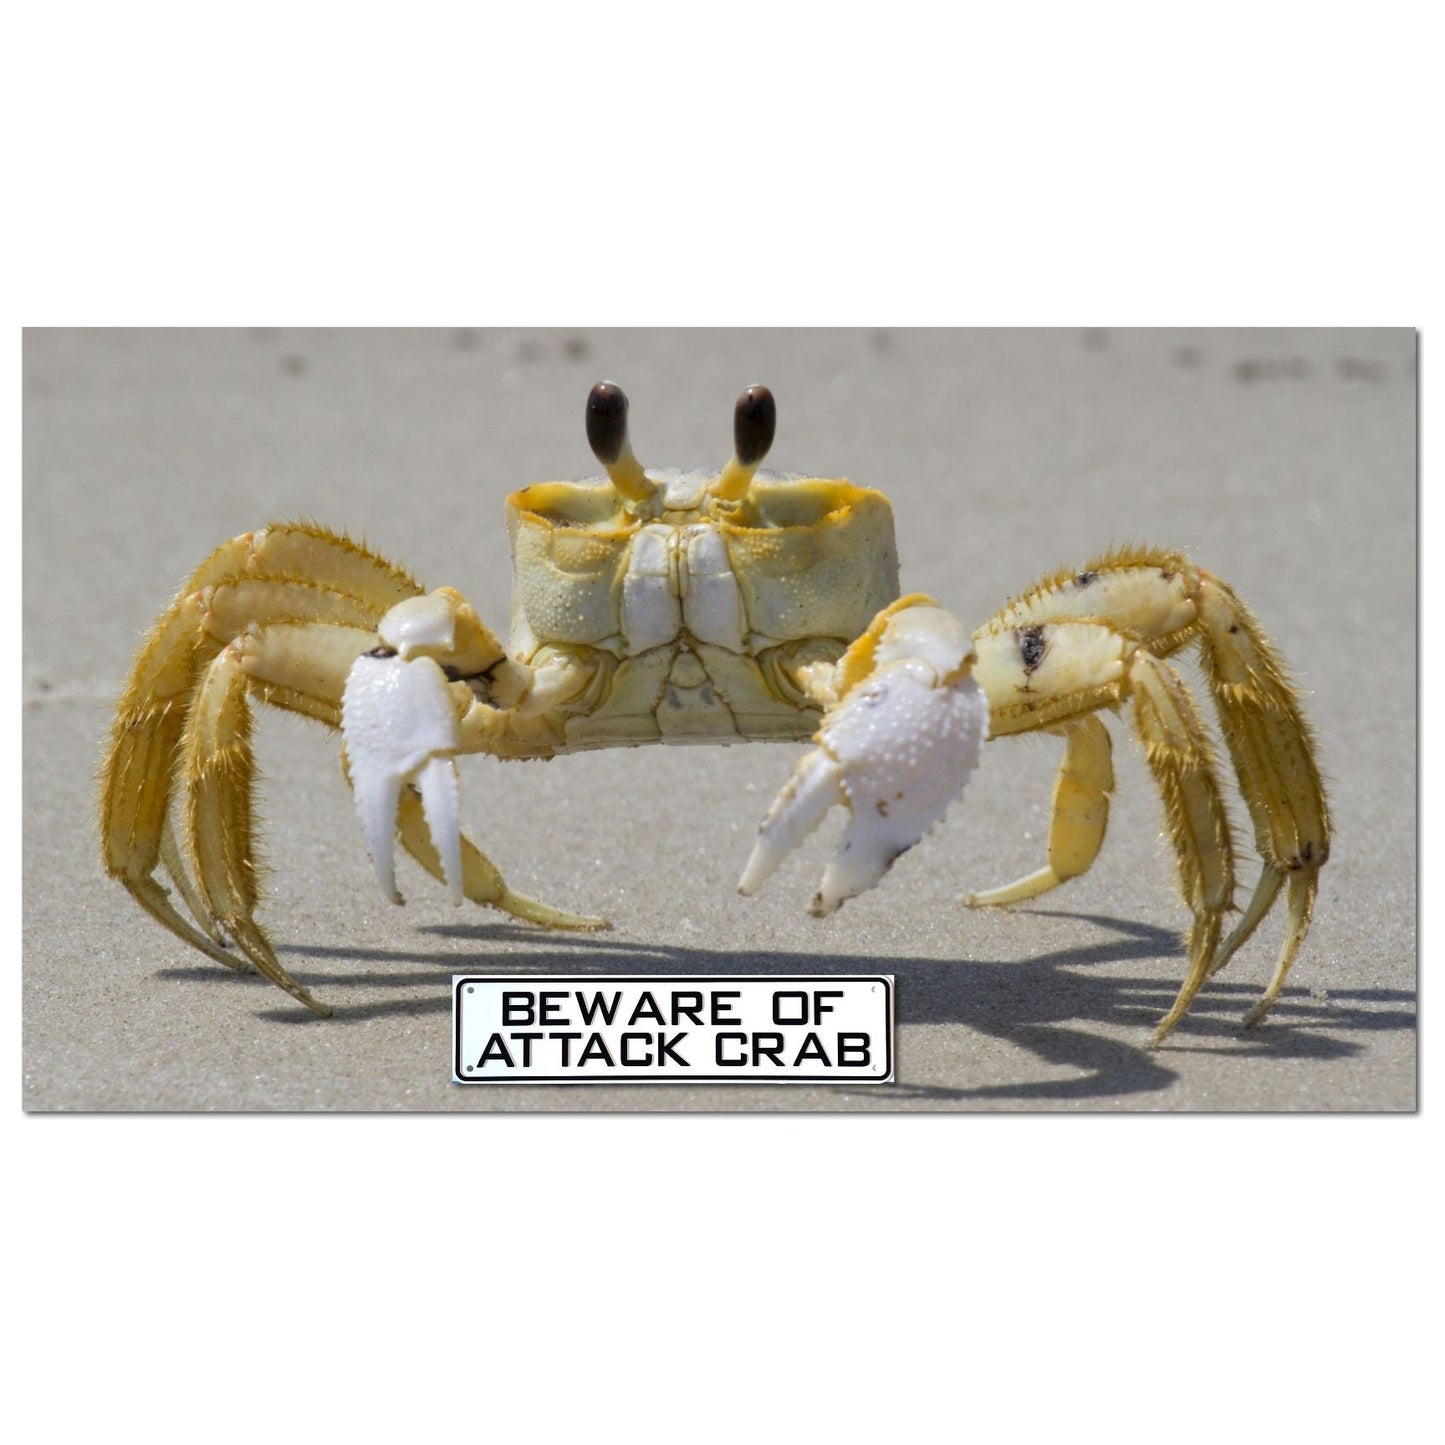 Beware of Attack Crab Sign Solid Plastic 12 X 3